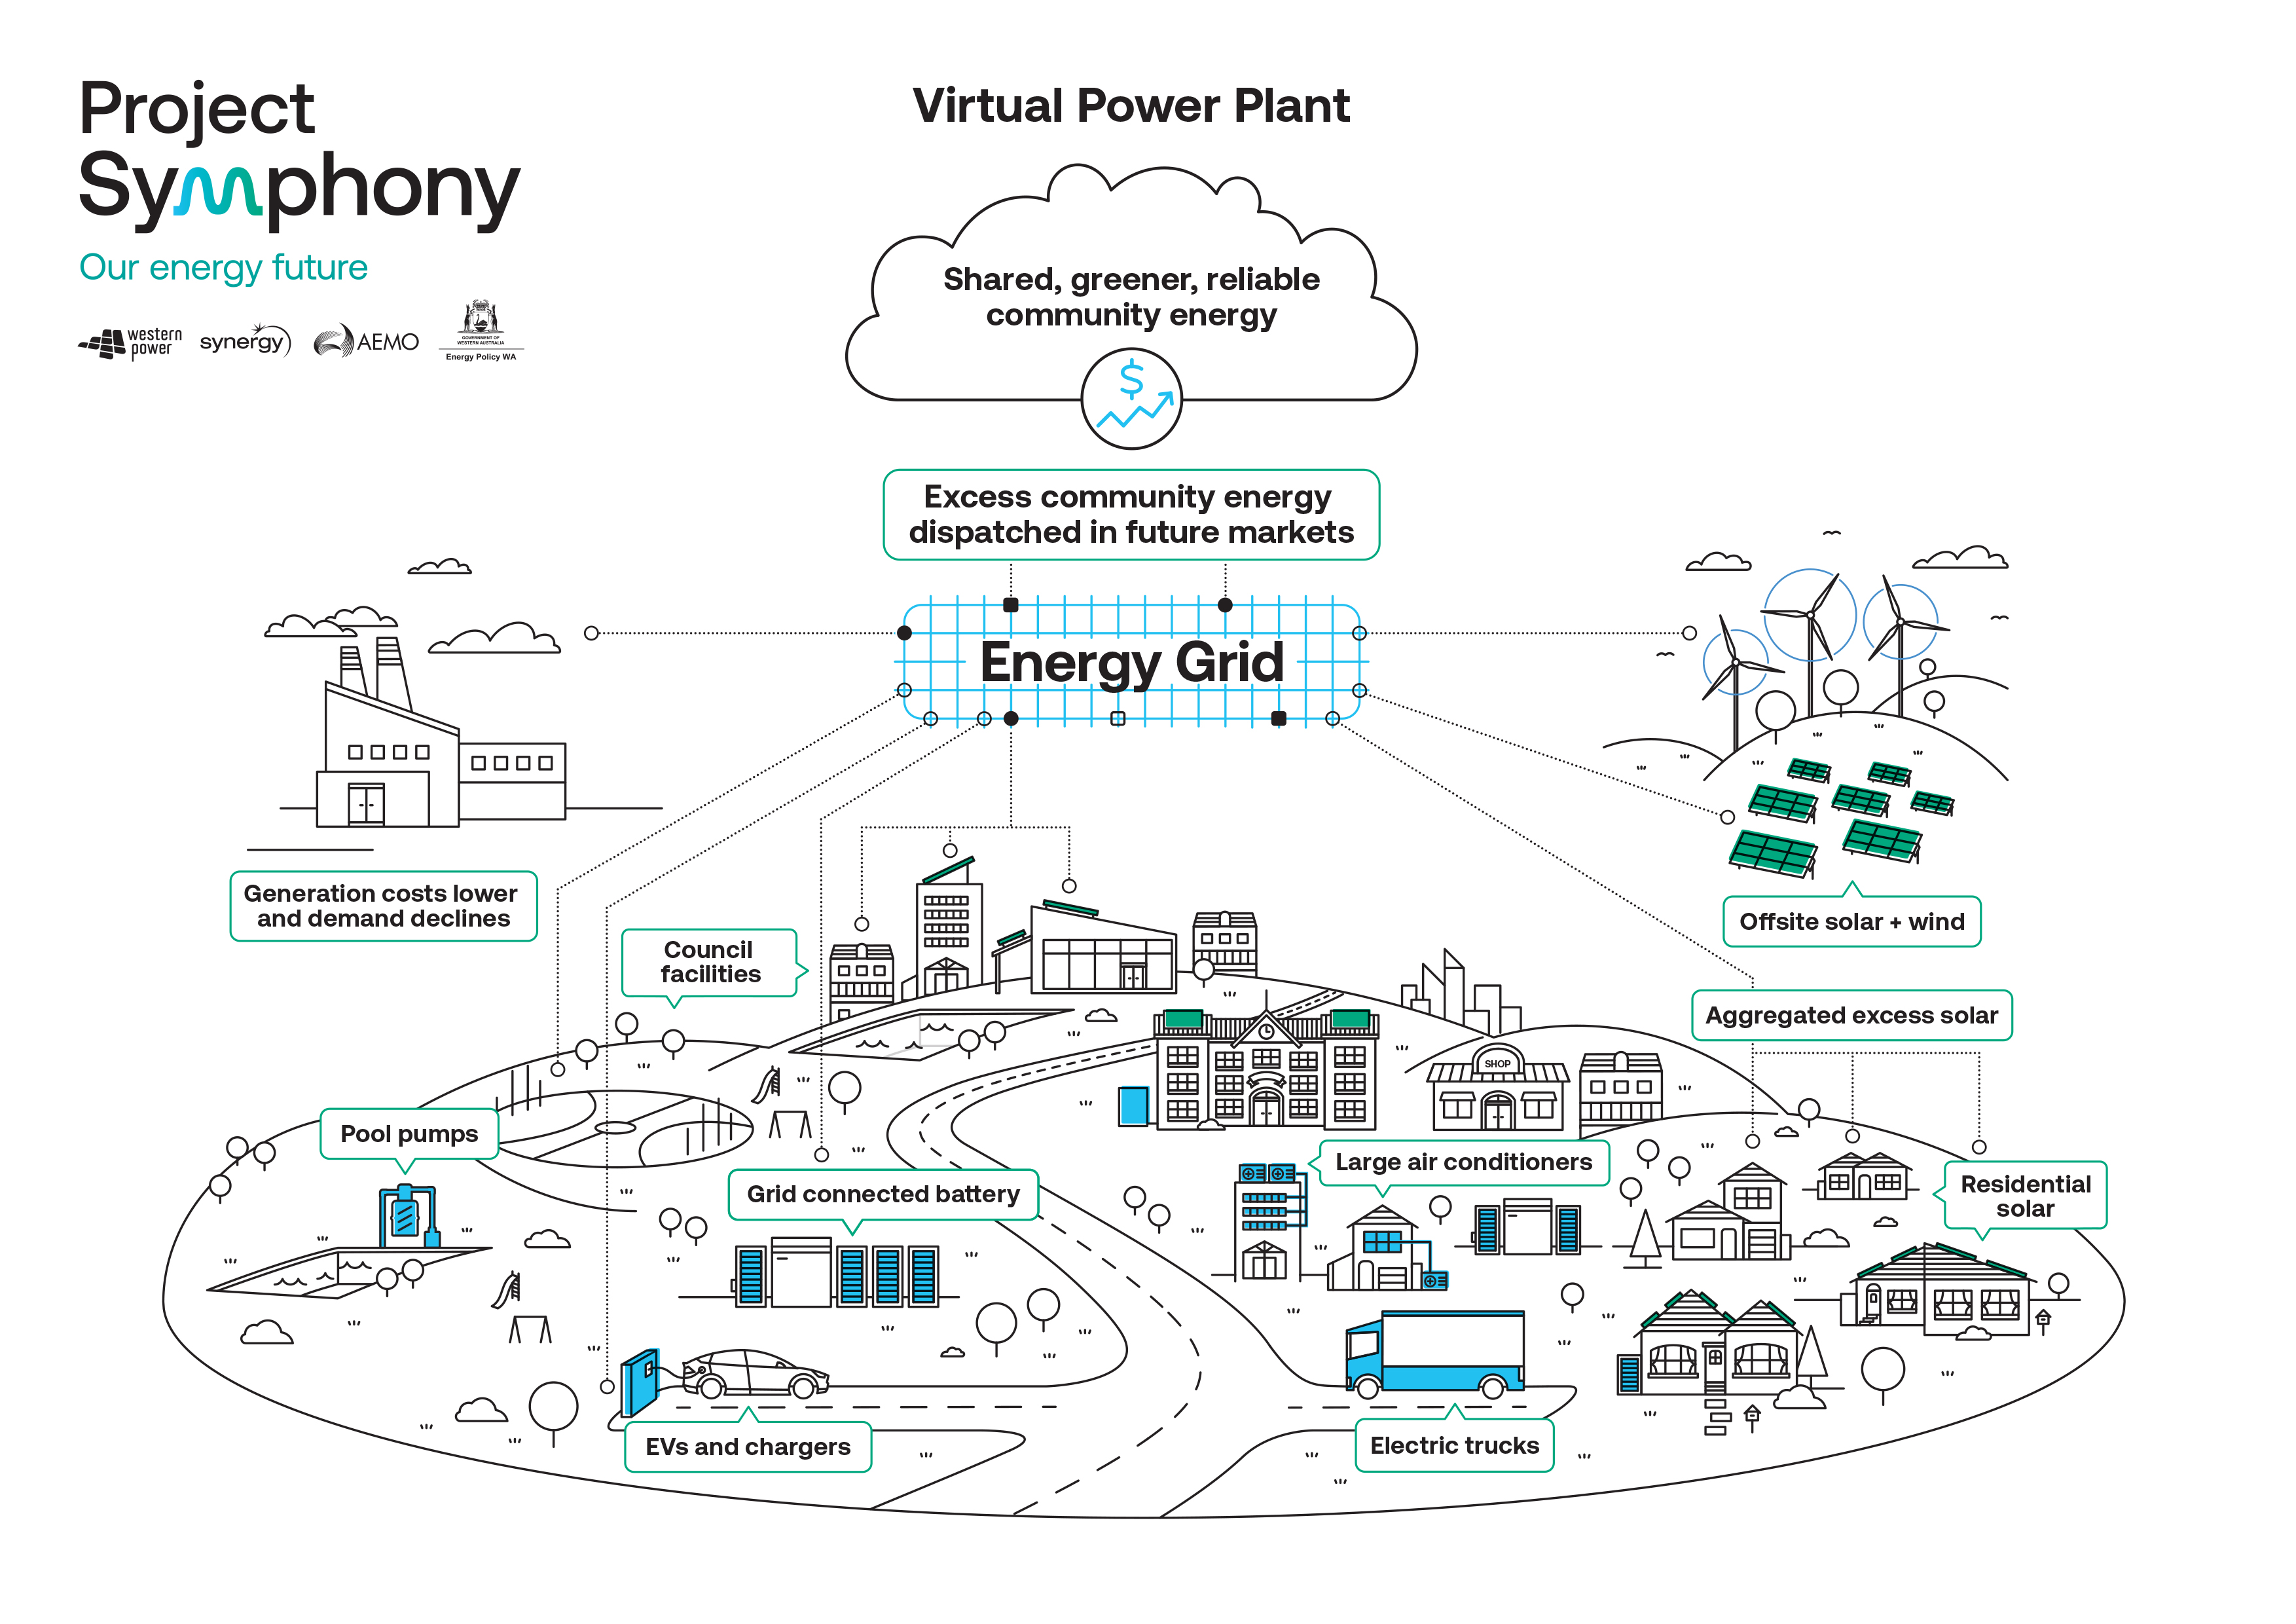 Virtual Power Plant. State energy